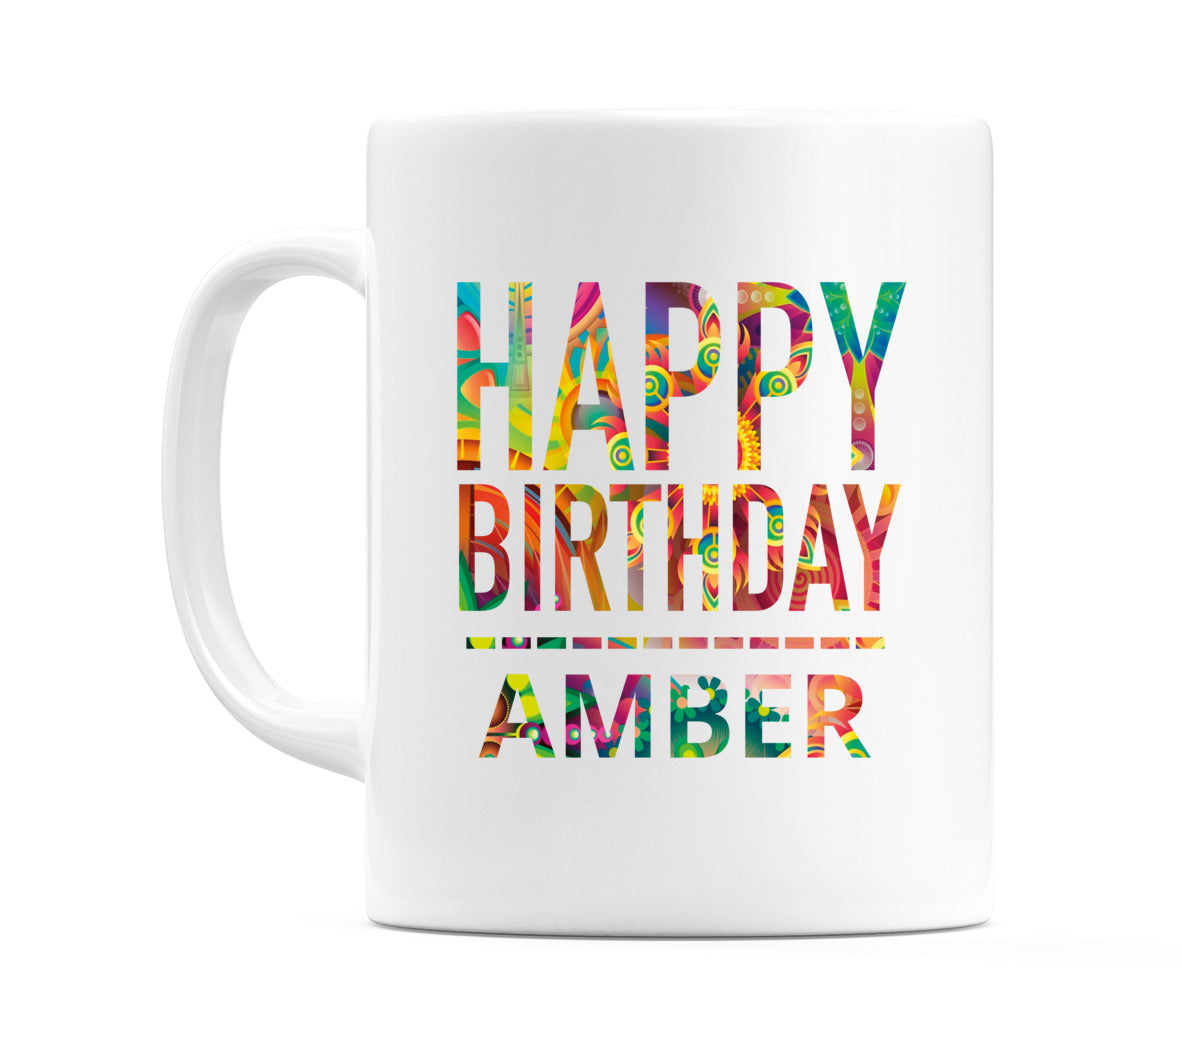 Happy Birthday Amber (Tie Dye Effect) Mug Cup by WeDoMugs